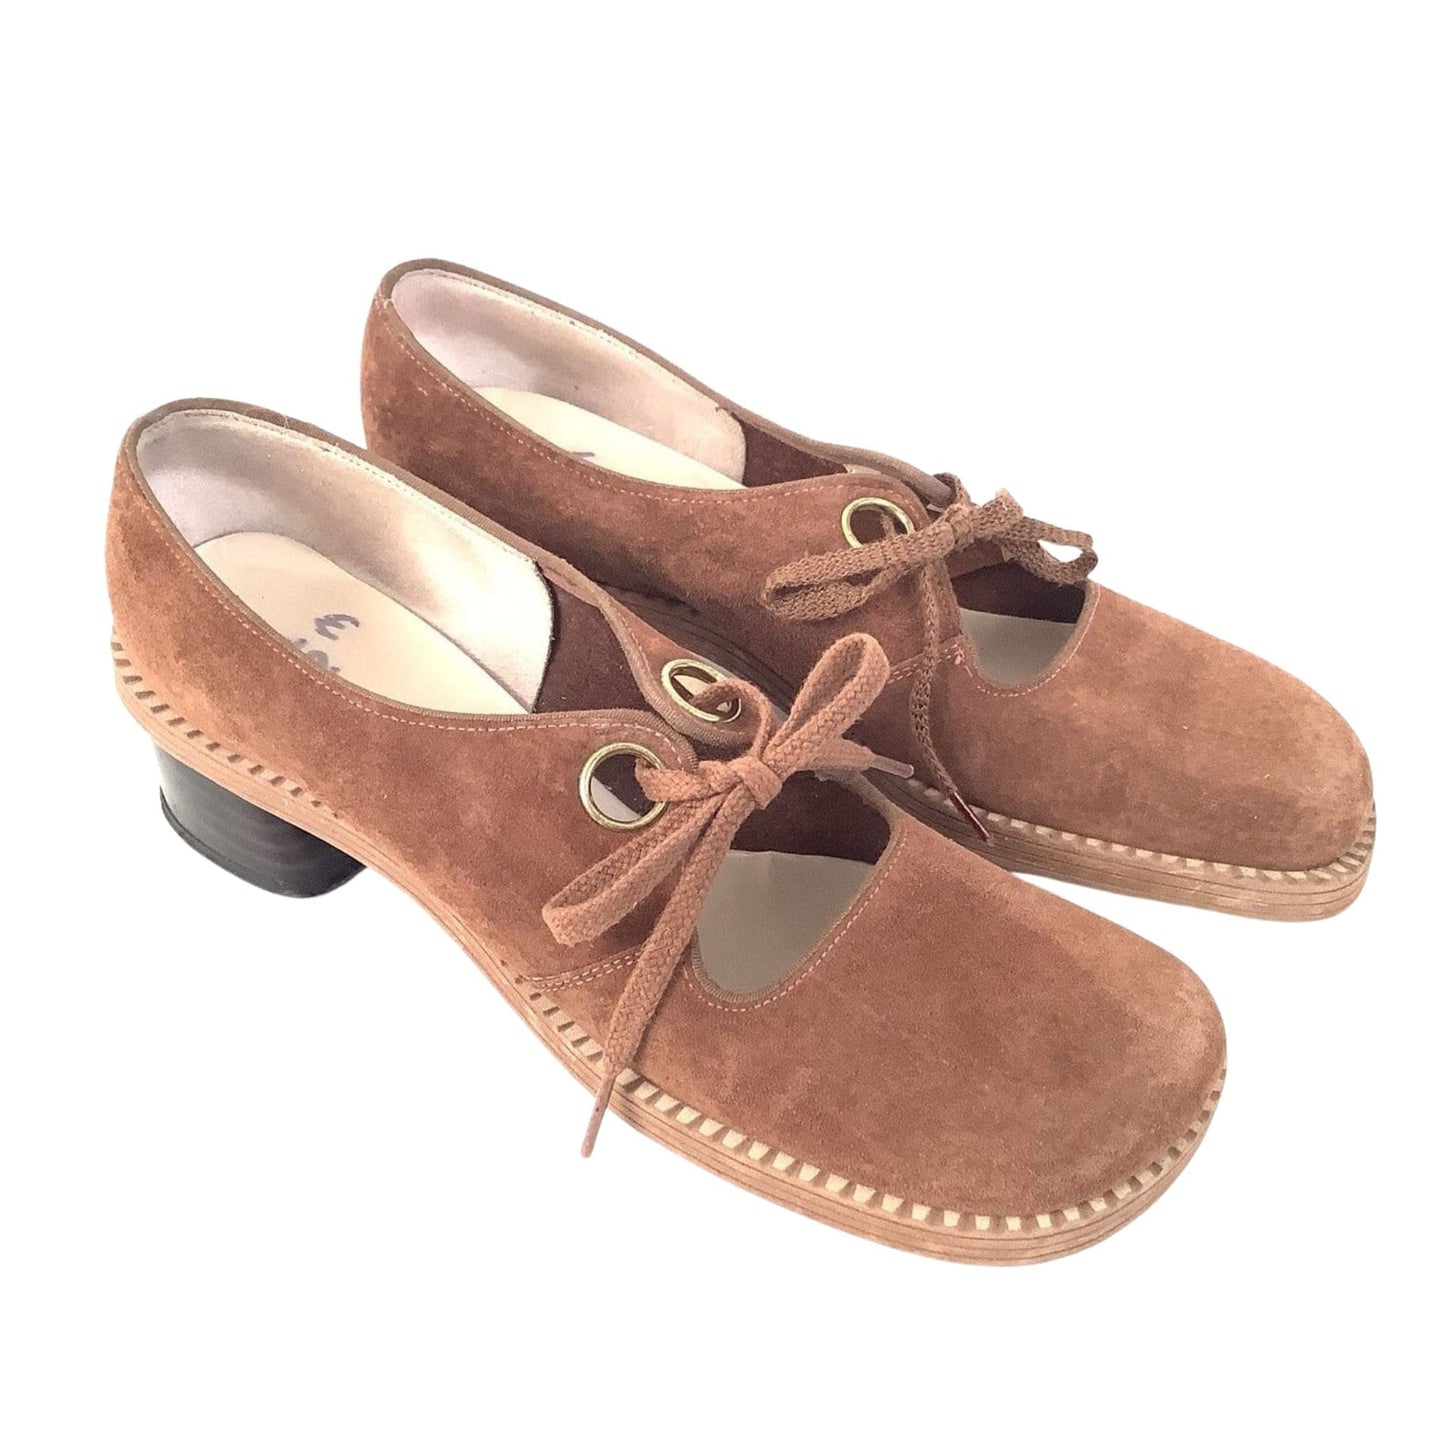 1970s Schoolgirl Style Shoes 7.5 / Brown / Vintage 1970s